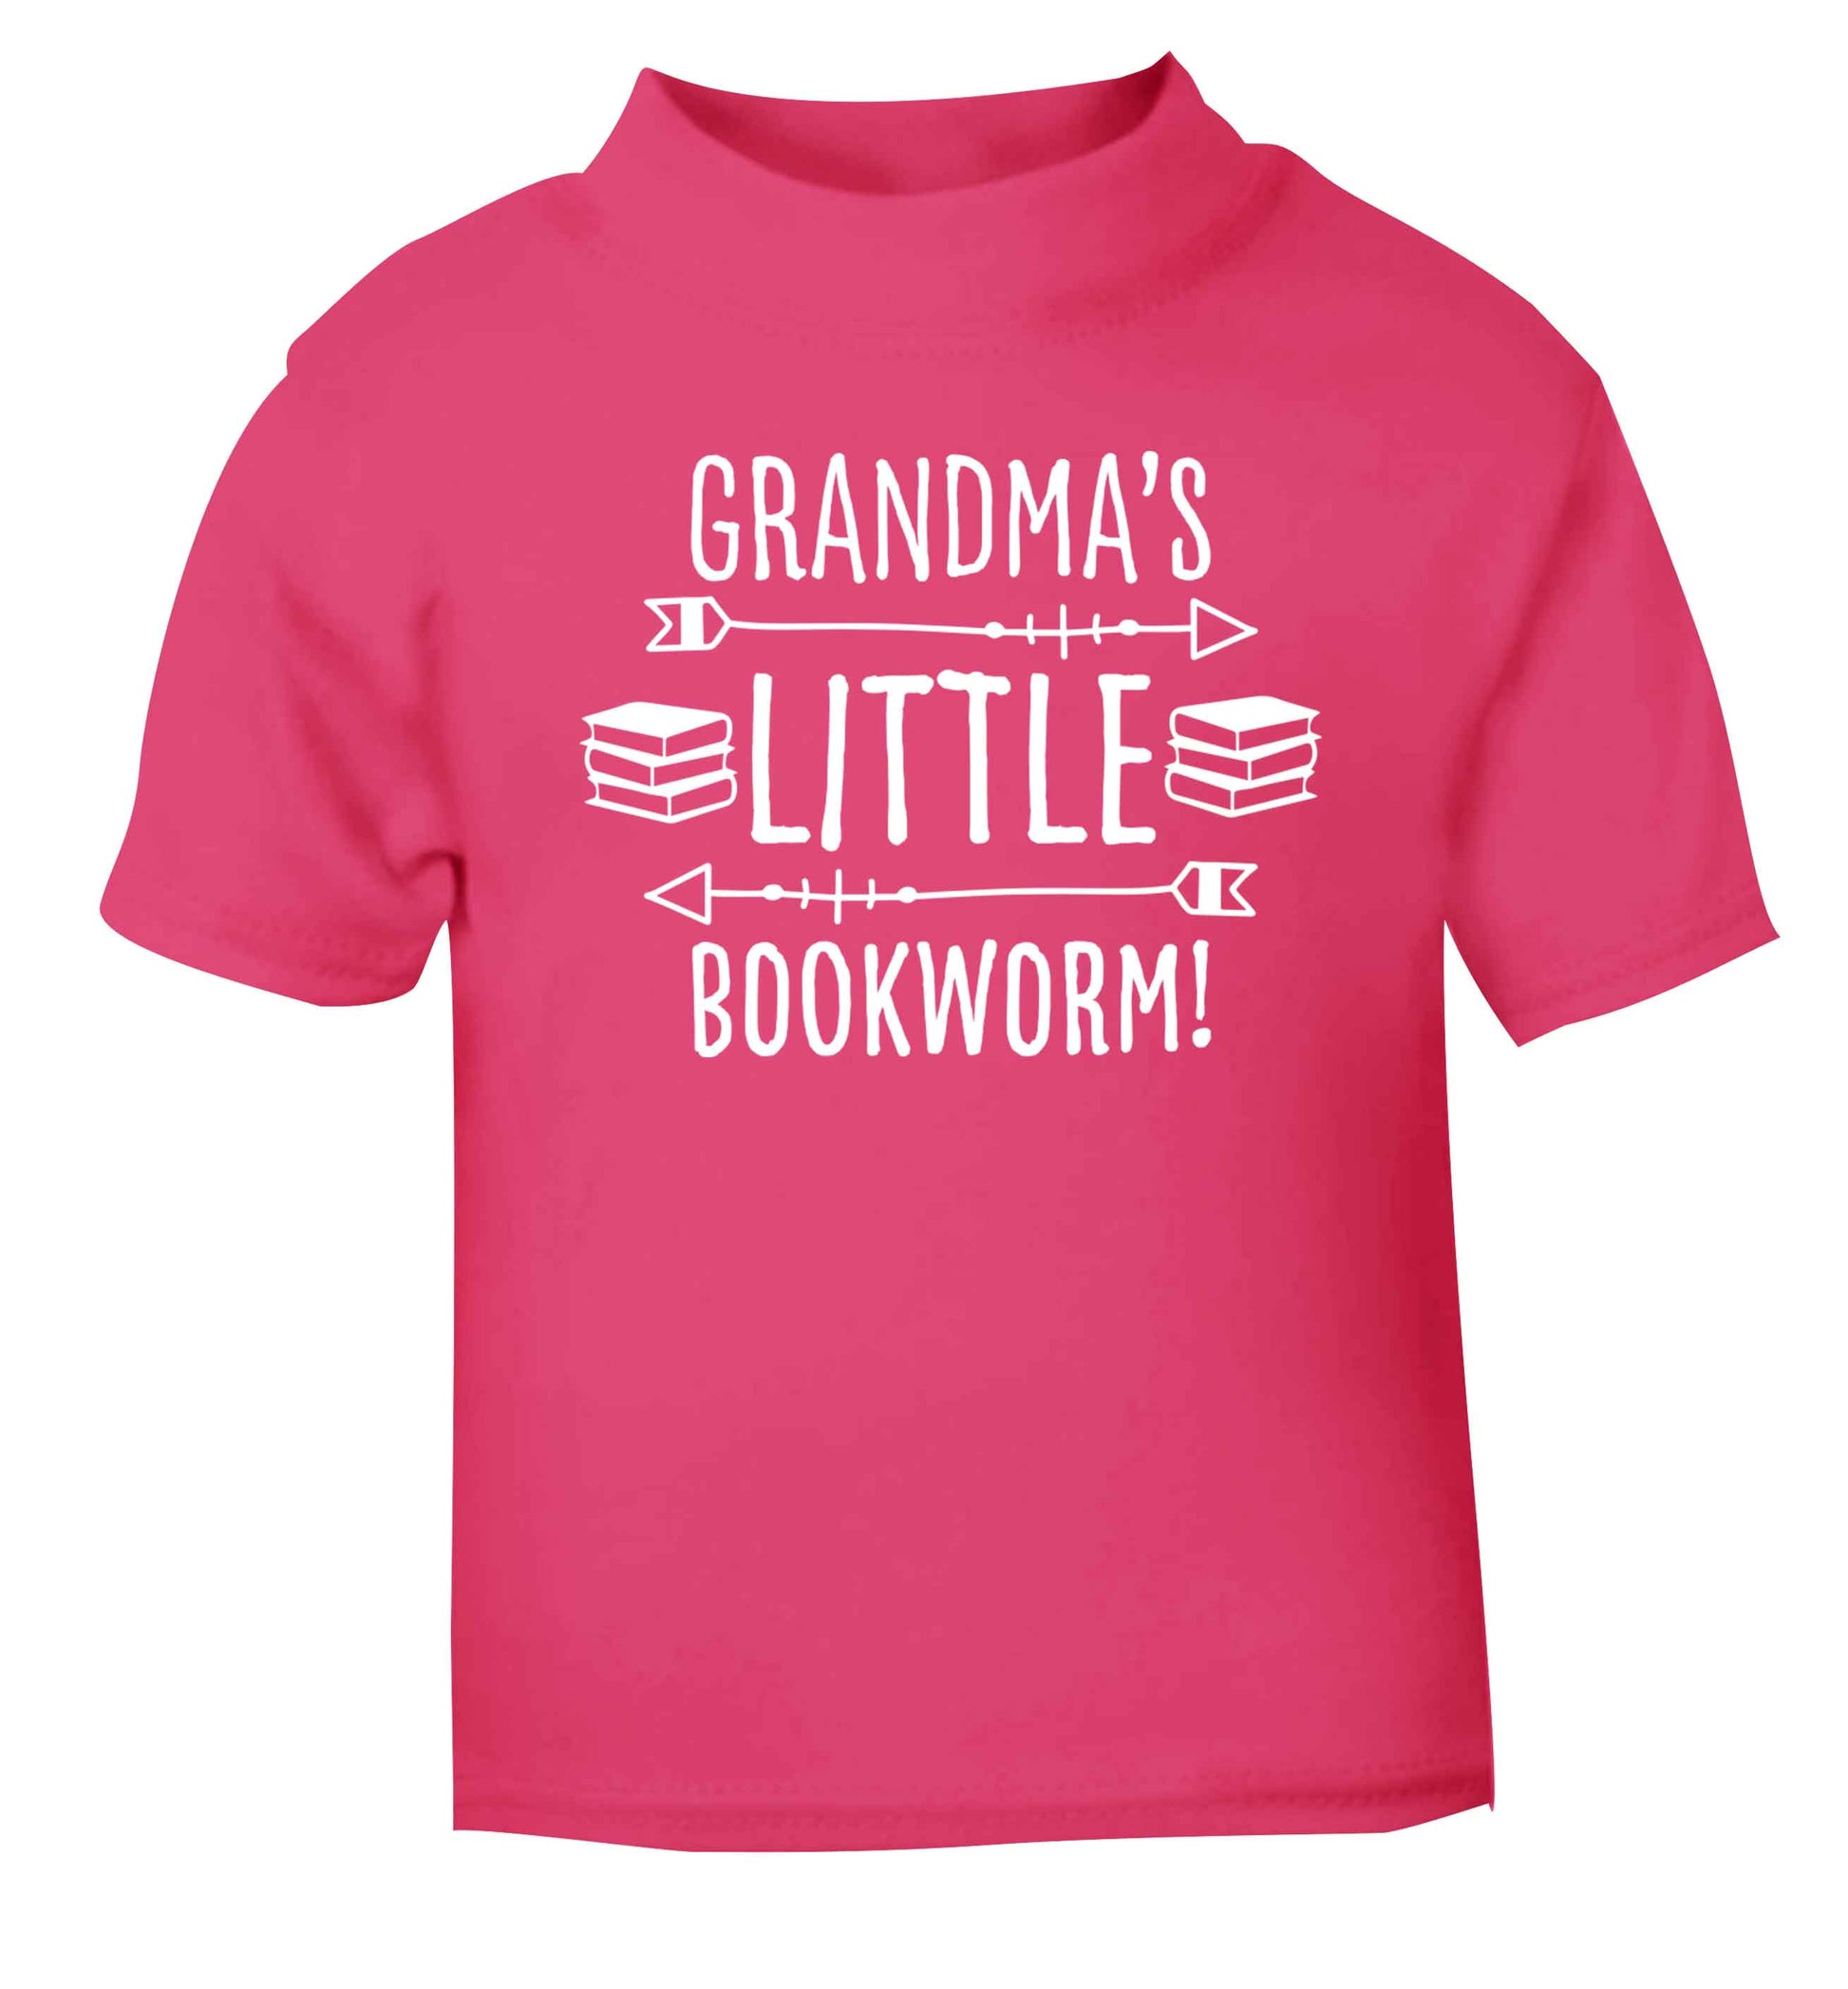 Grandma's little bookworm pink baby toddler Tshirt 2 Years